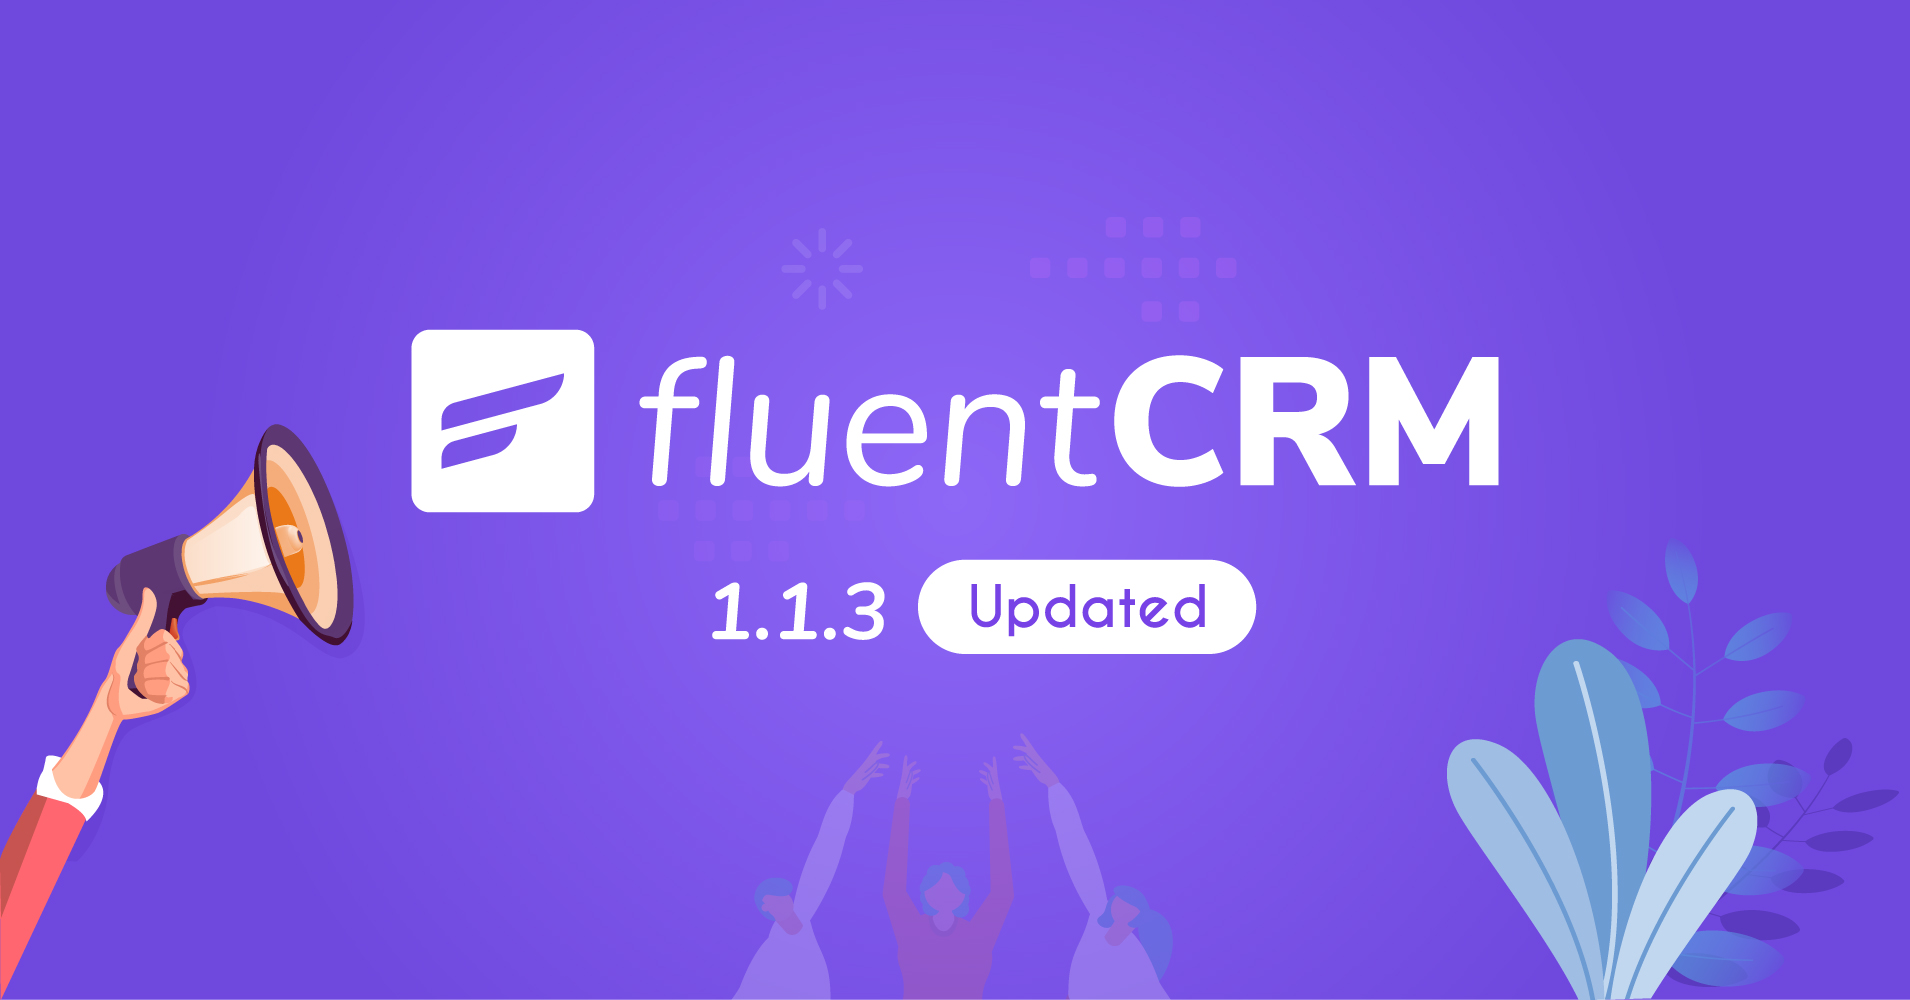 FluentCRM version 1.1.3 release note